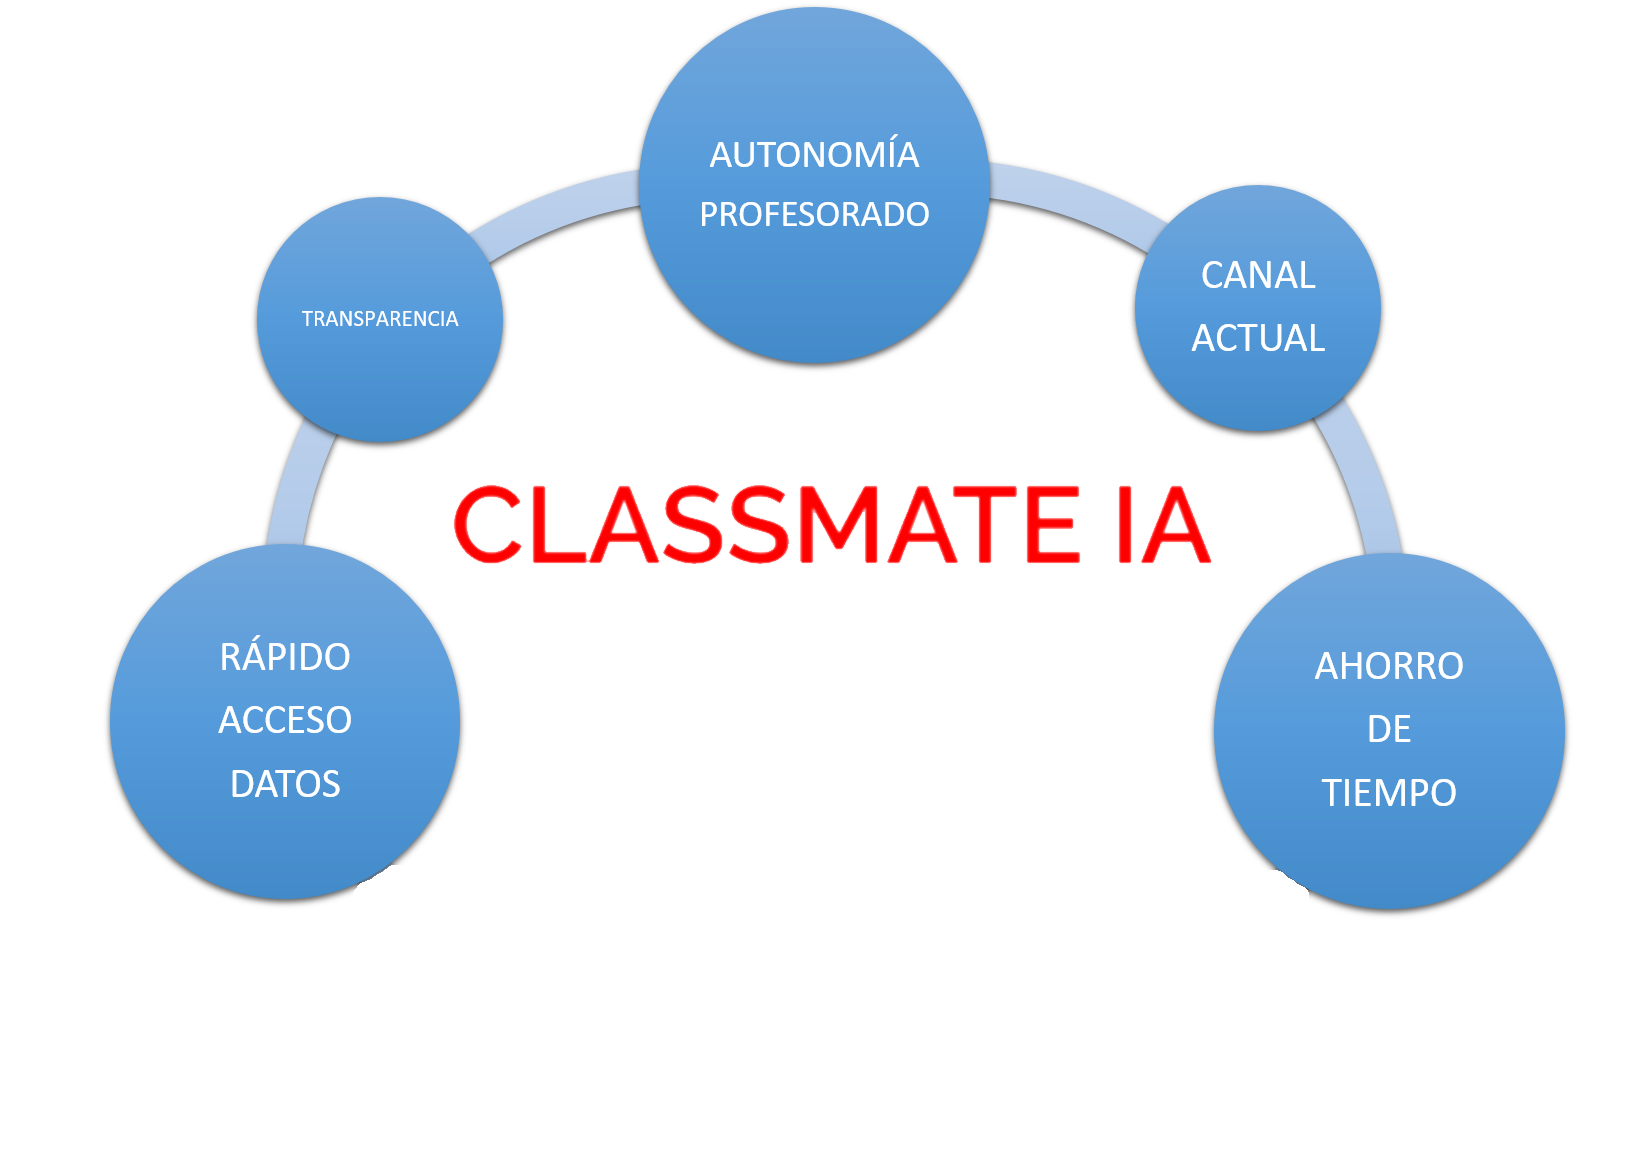 Classmate IA